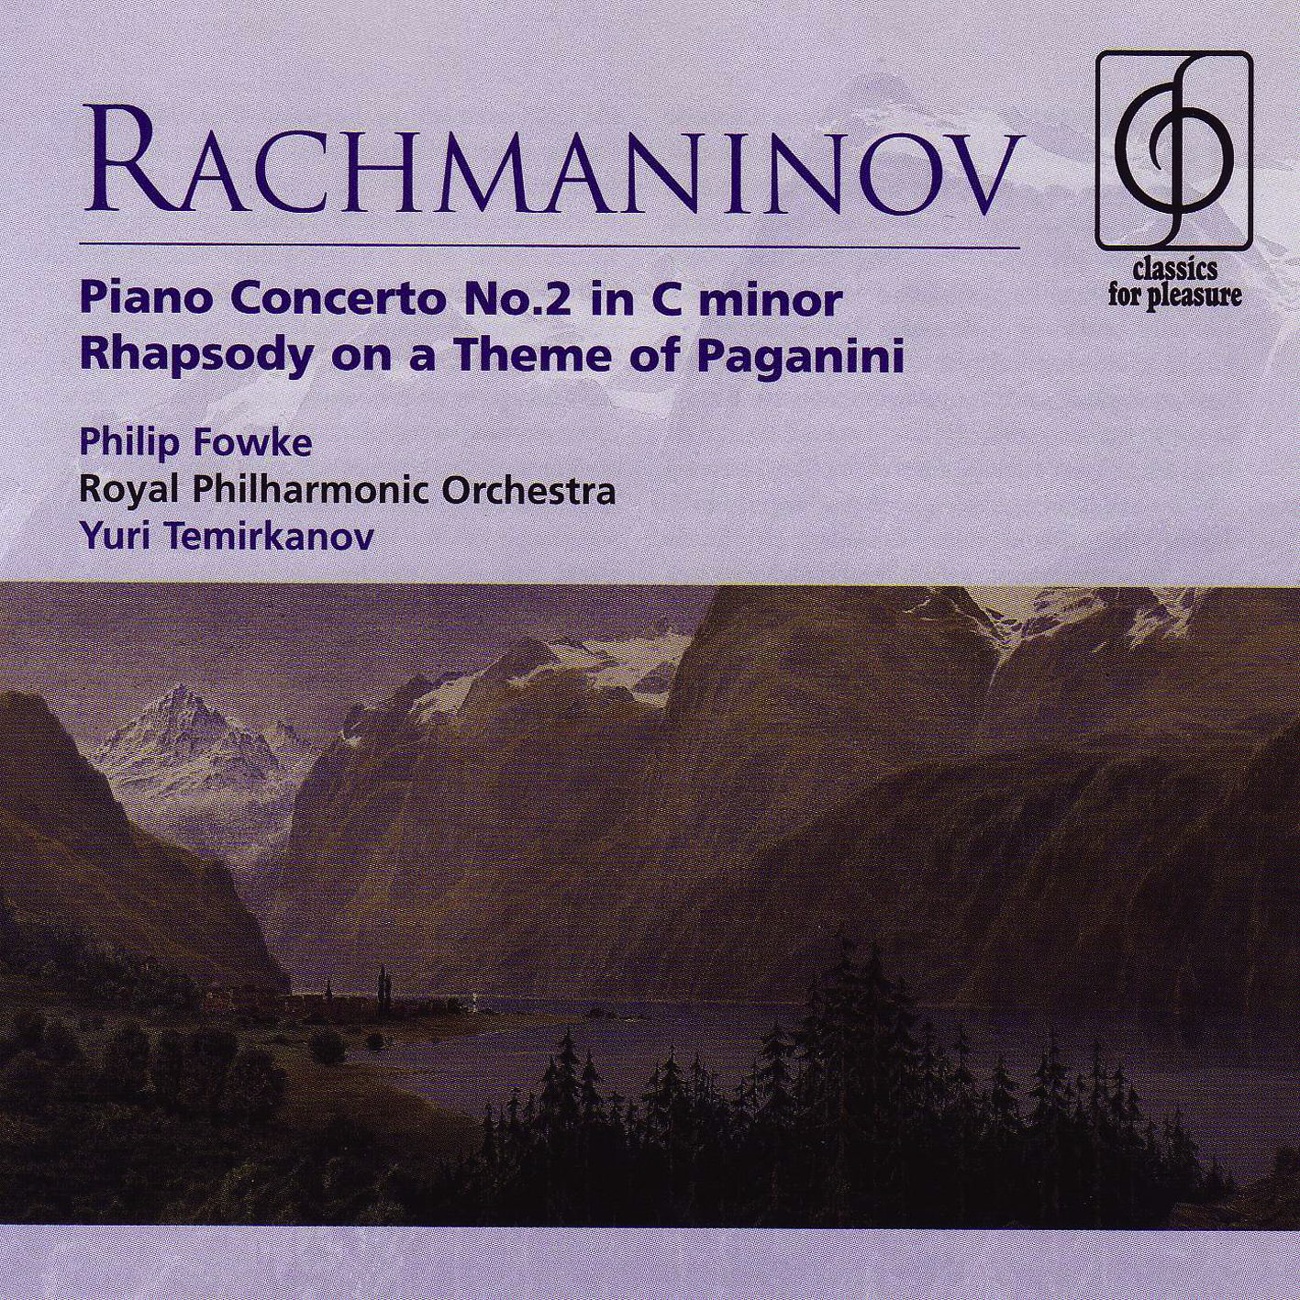 Rhapsody on a Theme of Paganini Op. 43: Variation XVI (Allegretto)